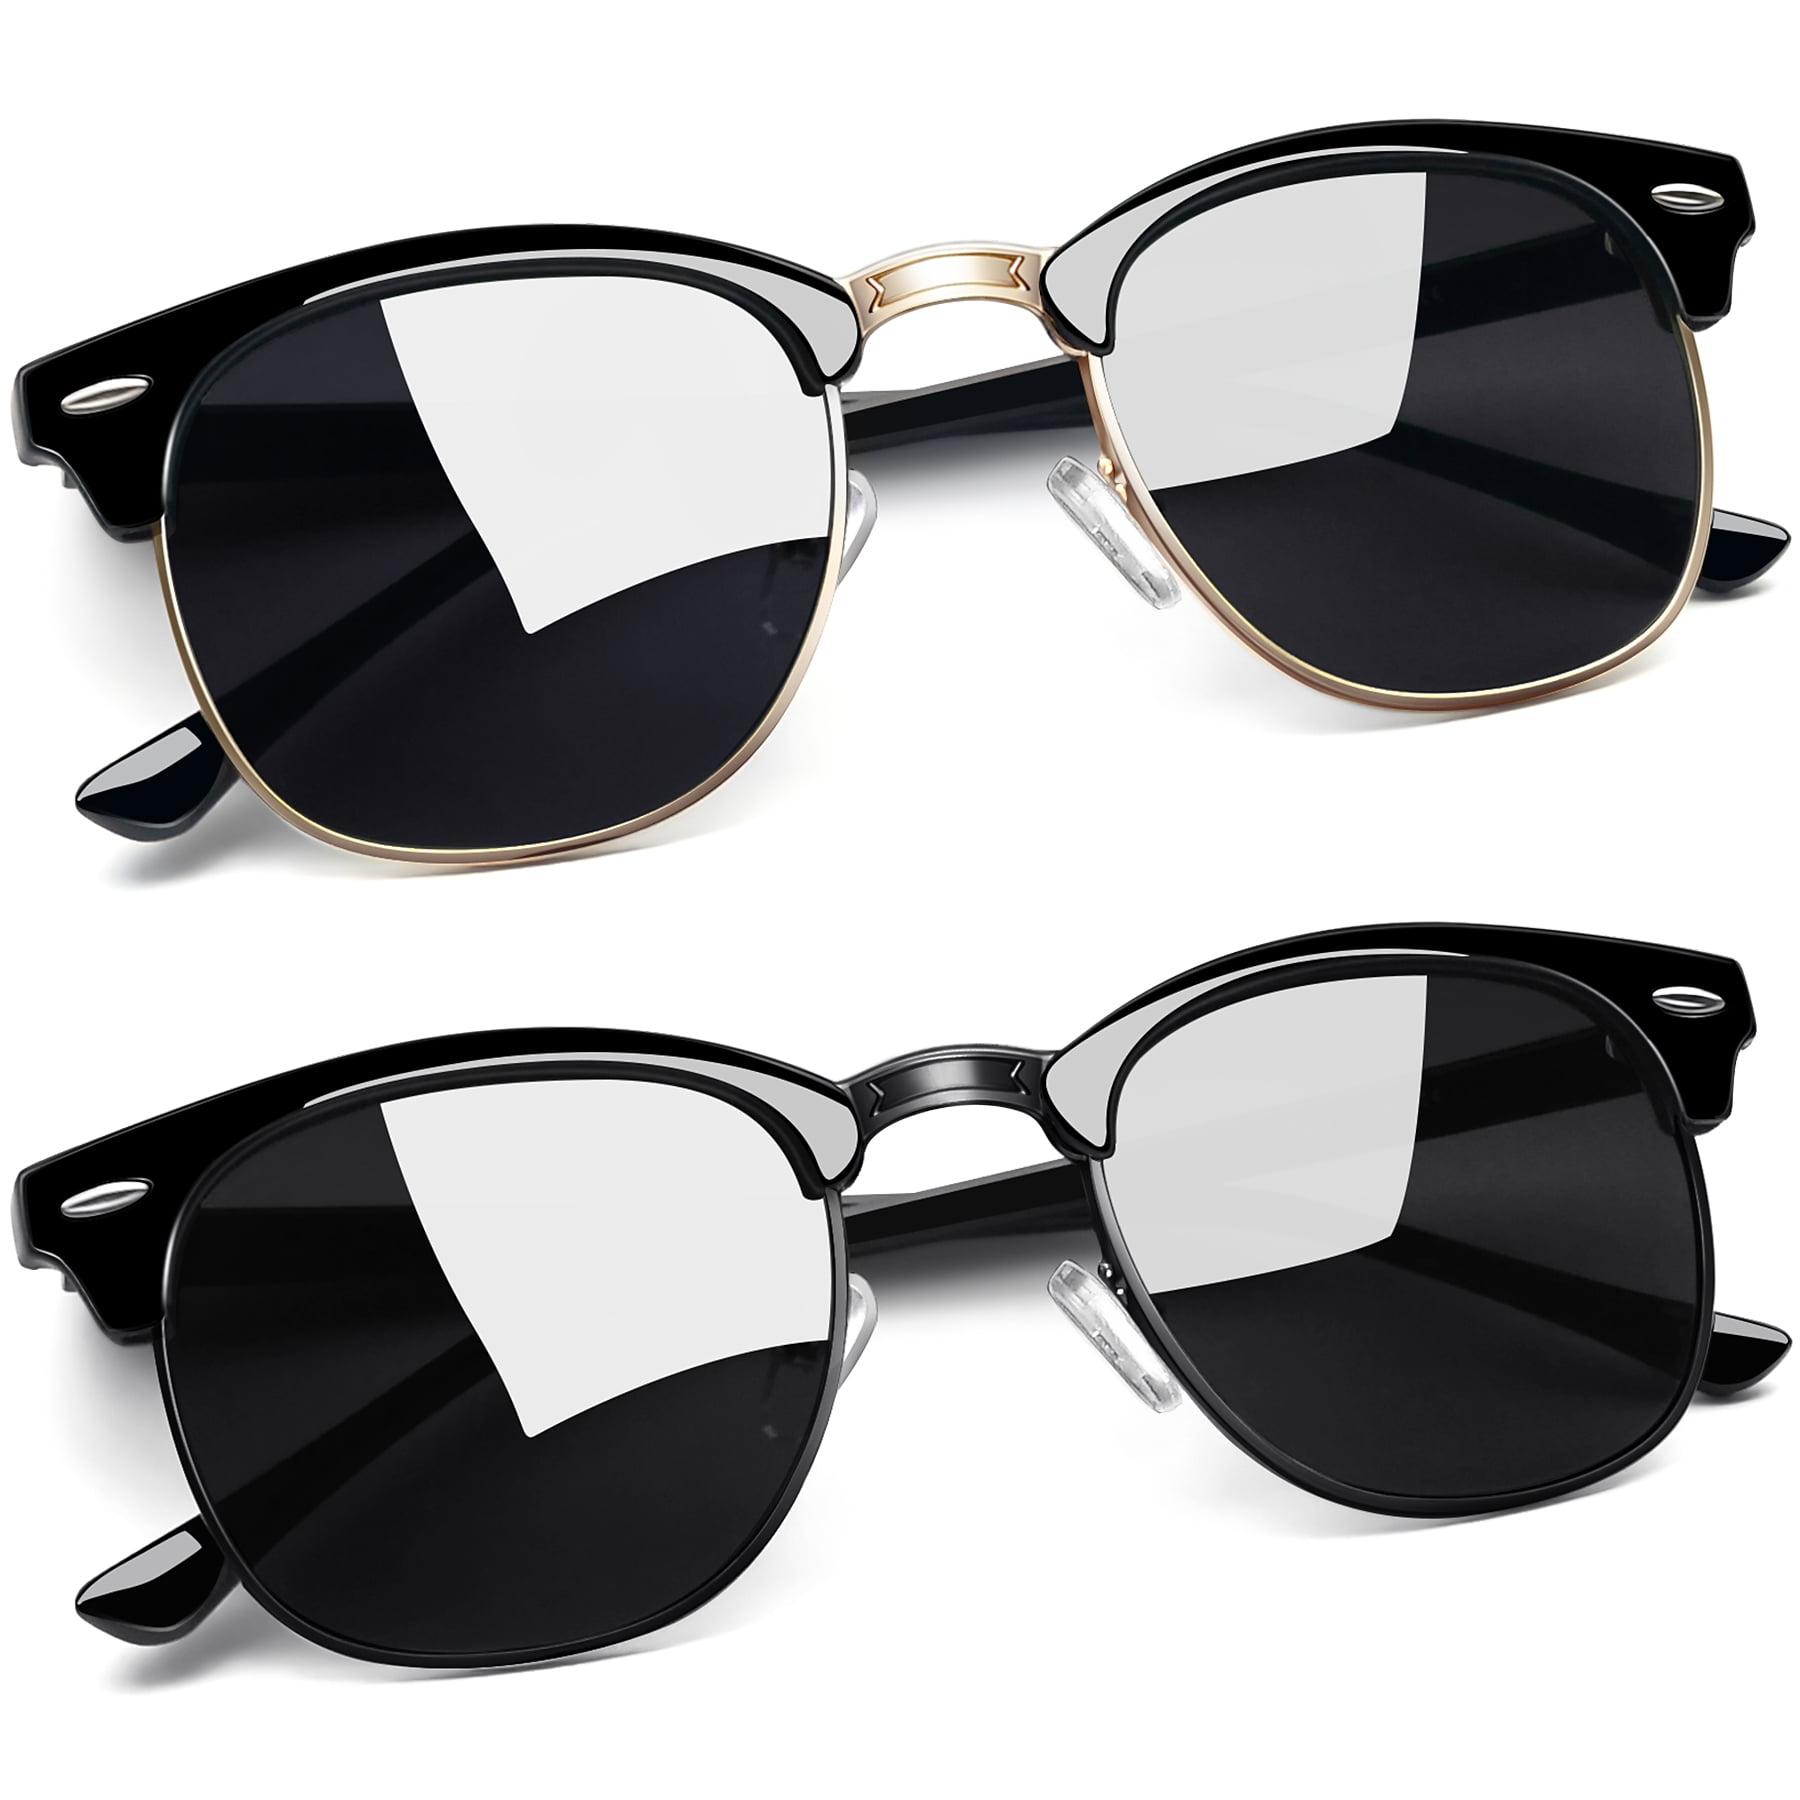 Classic Polarized Sunglasses Half Frame Semi-Rimless UV400 Protection Mirrored Eyewear Sun Glasses with Case for Men Women